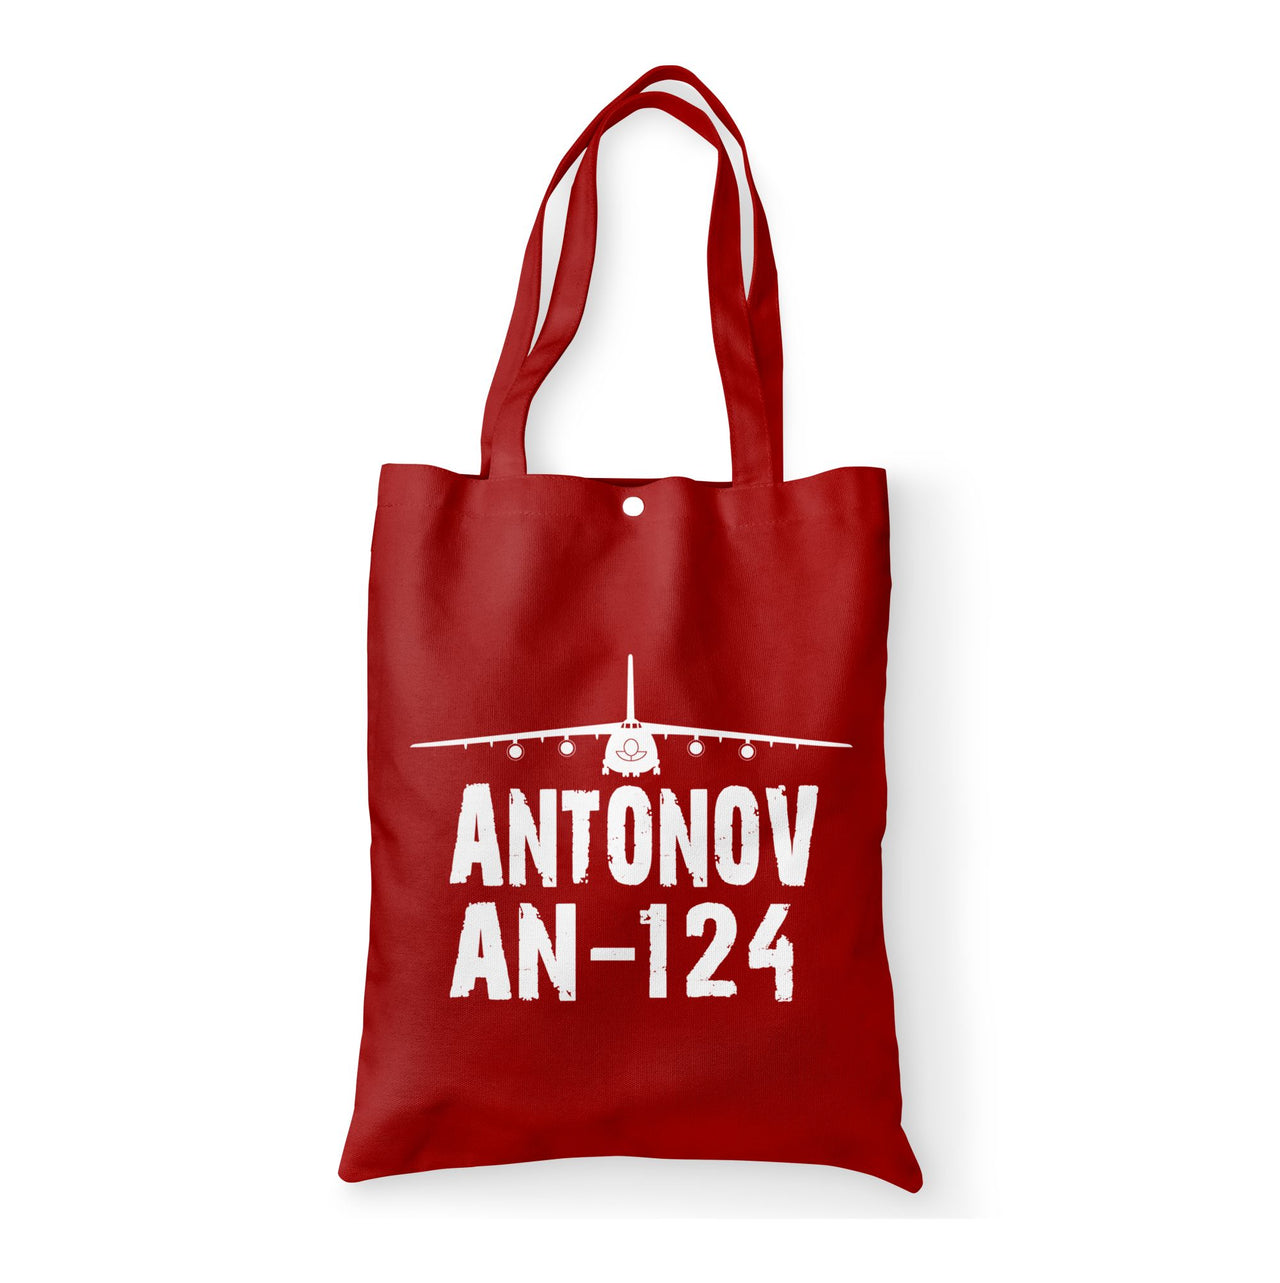 Antonov AN-124 & Plane Designed Tote Bags